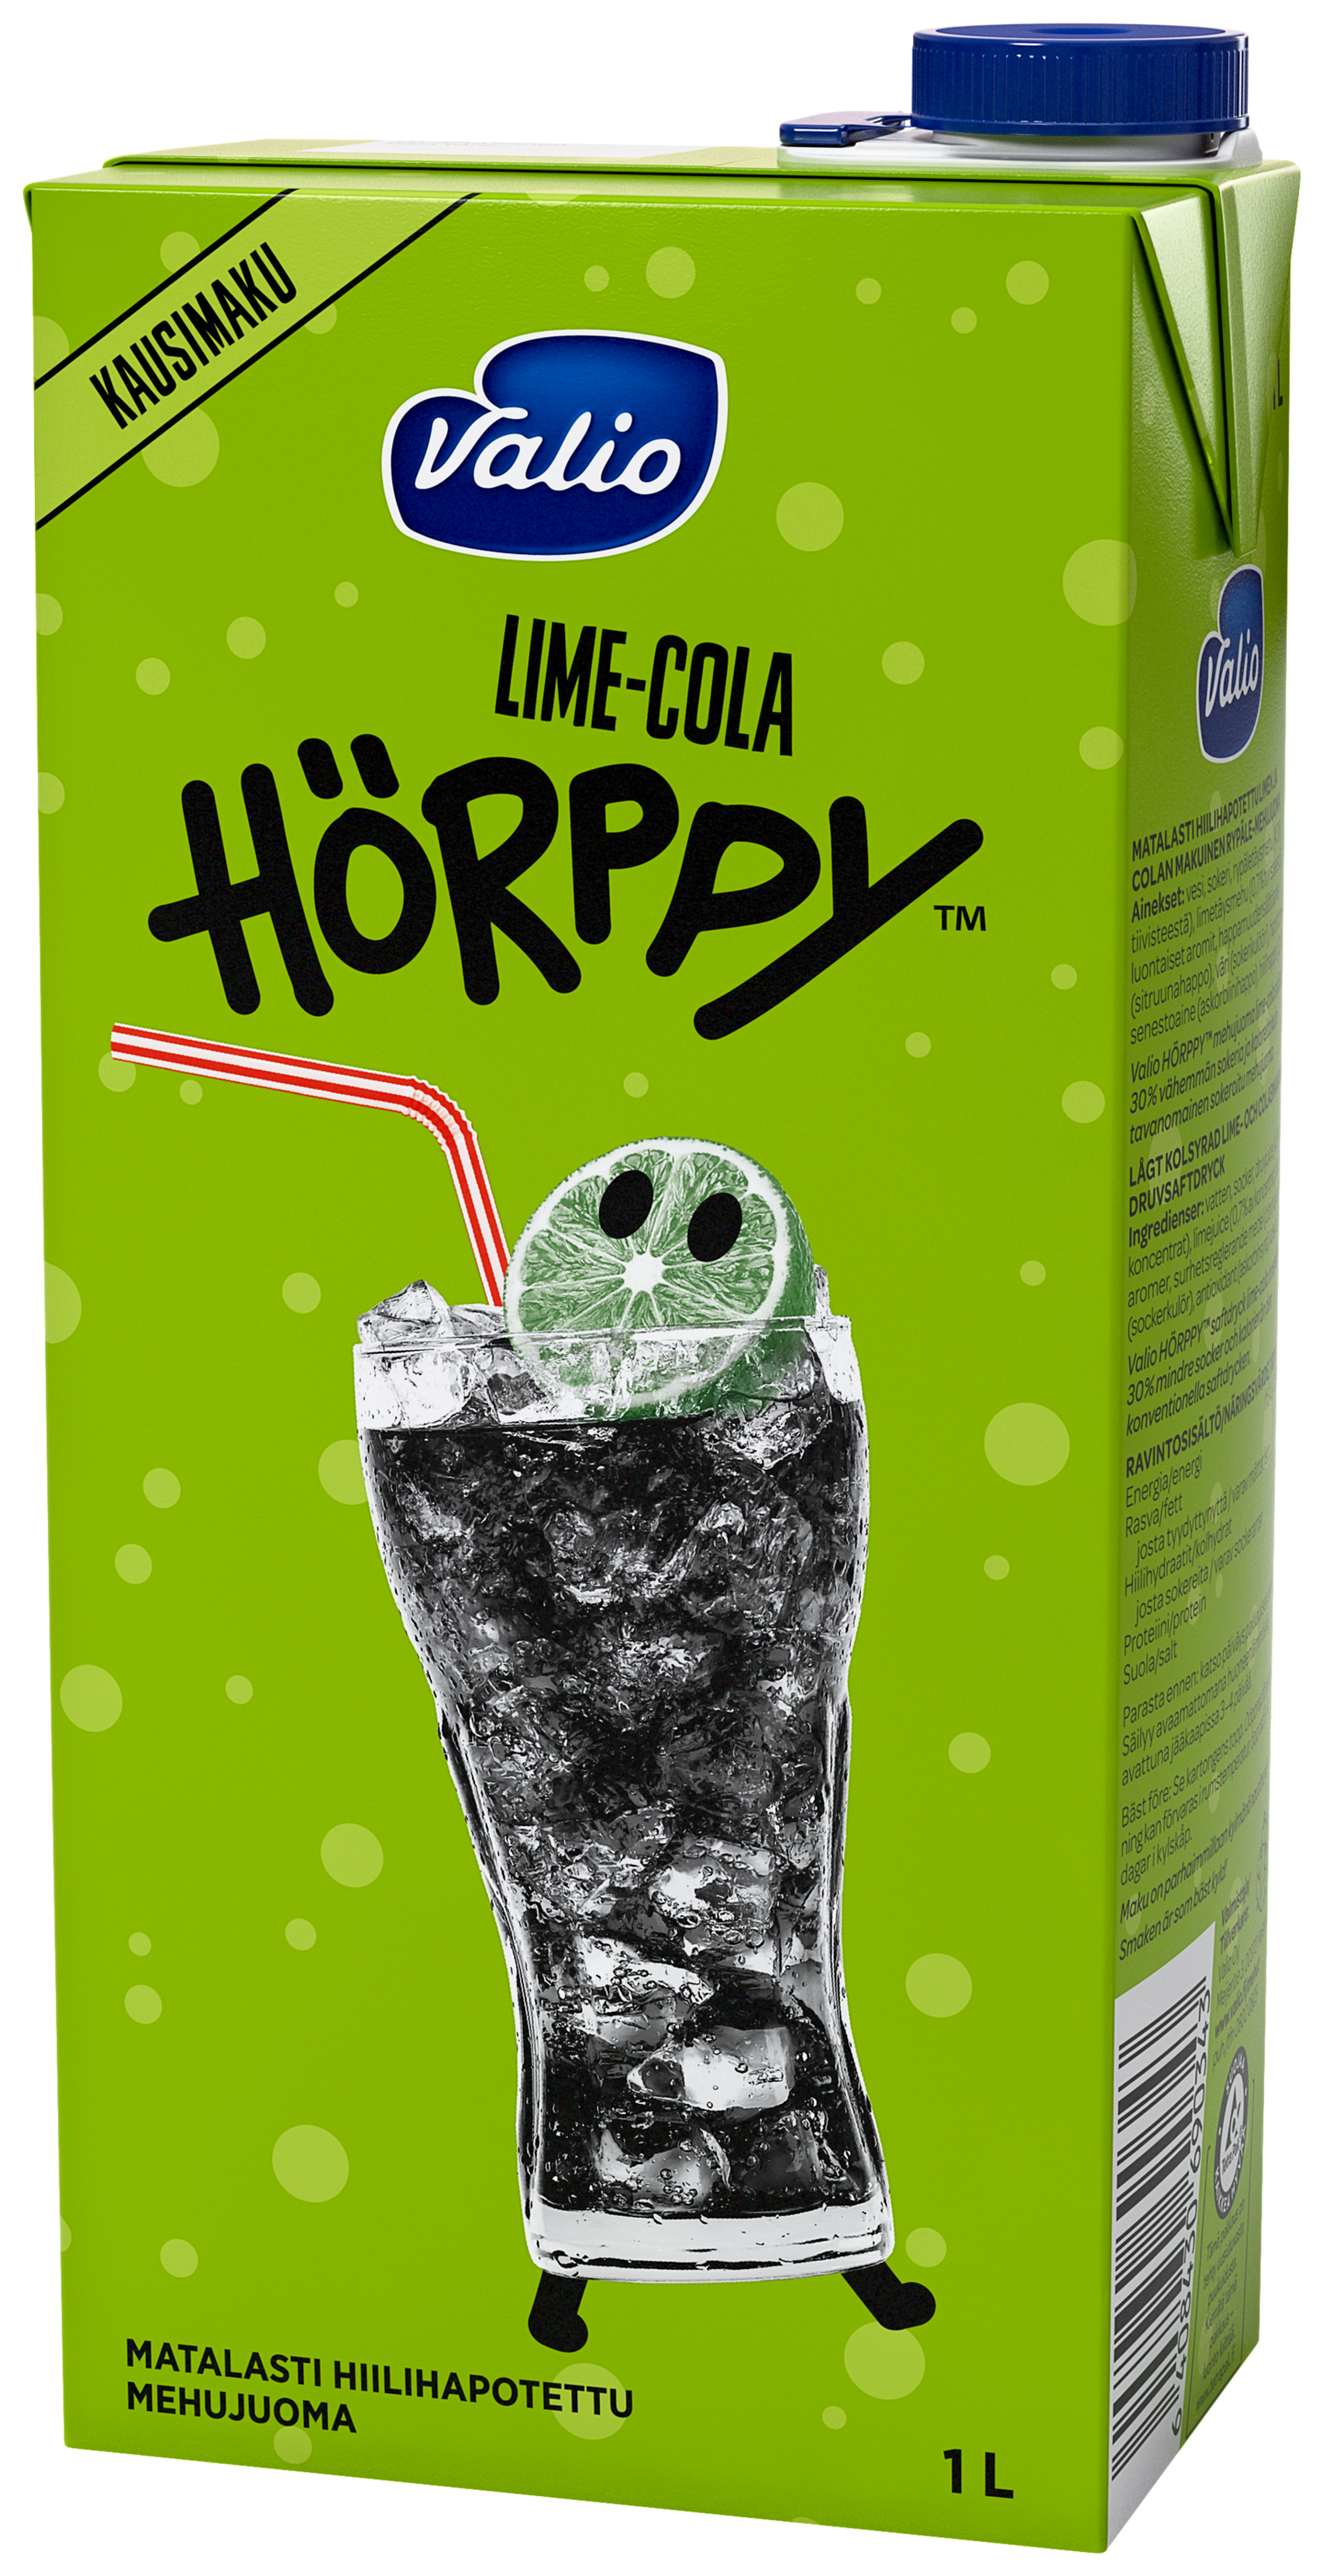 Valio Hörppy mehujuoma 1l Cola -Lime